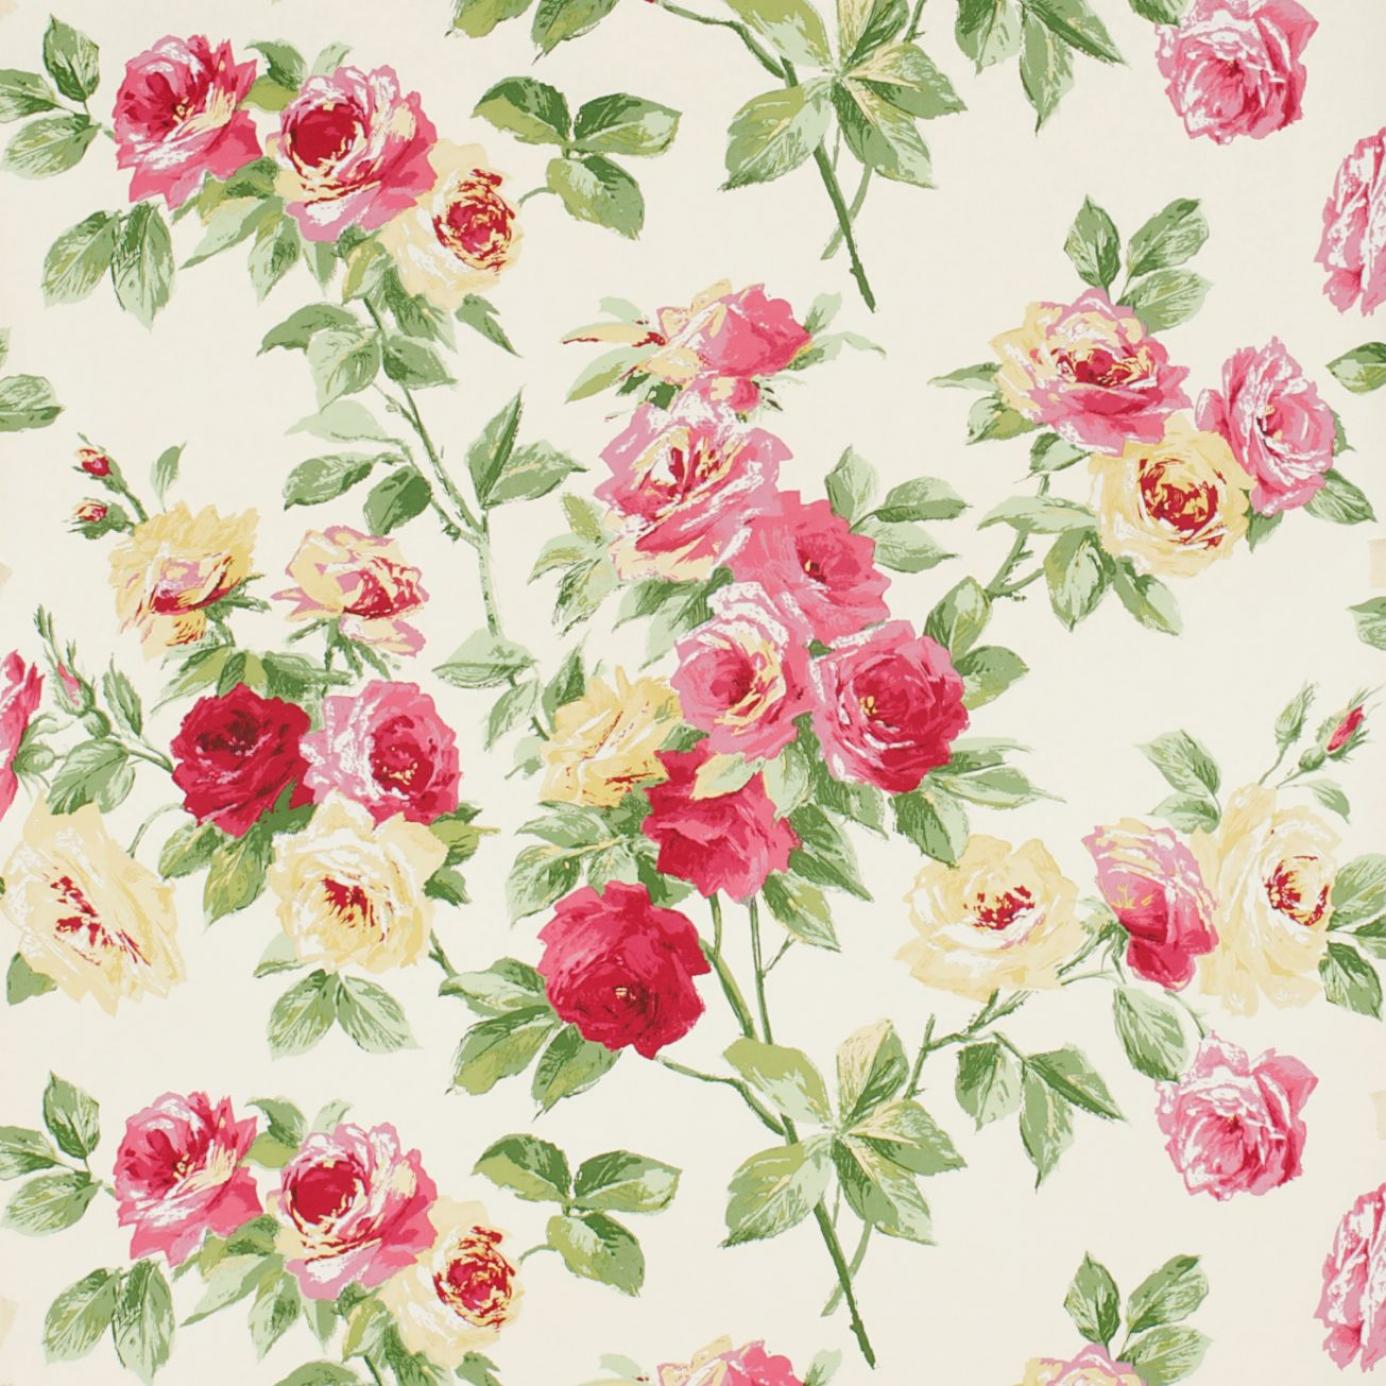 44+] Vintage Yellow Rose Wallpaper - WallpaperSafari